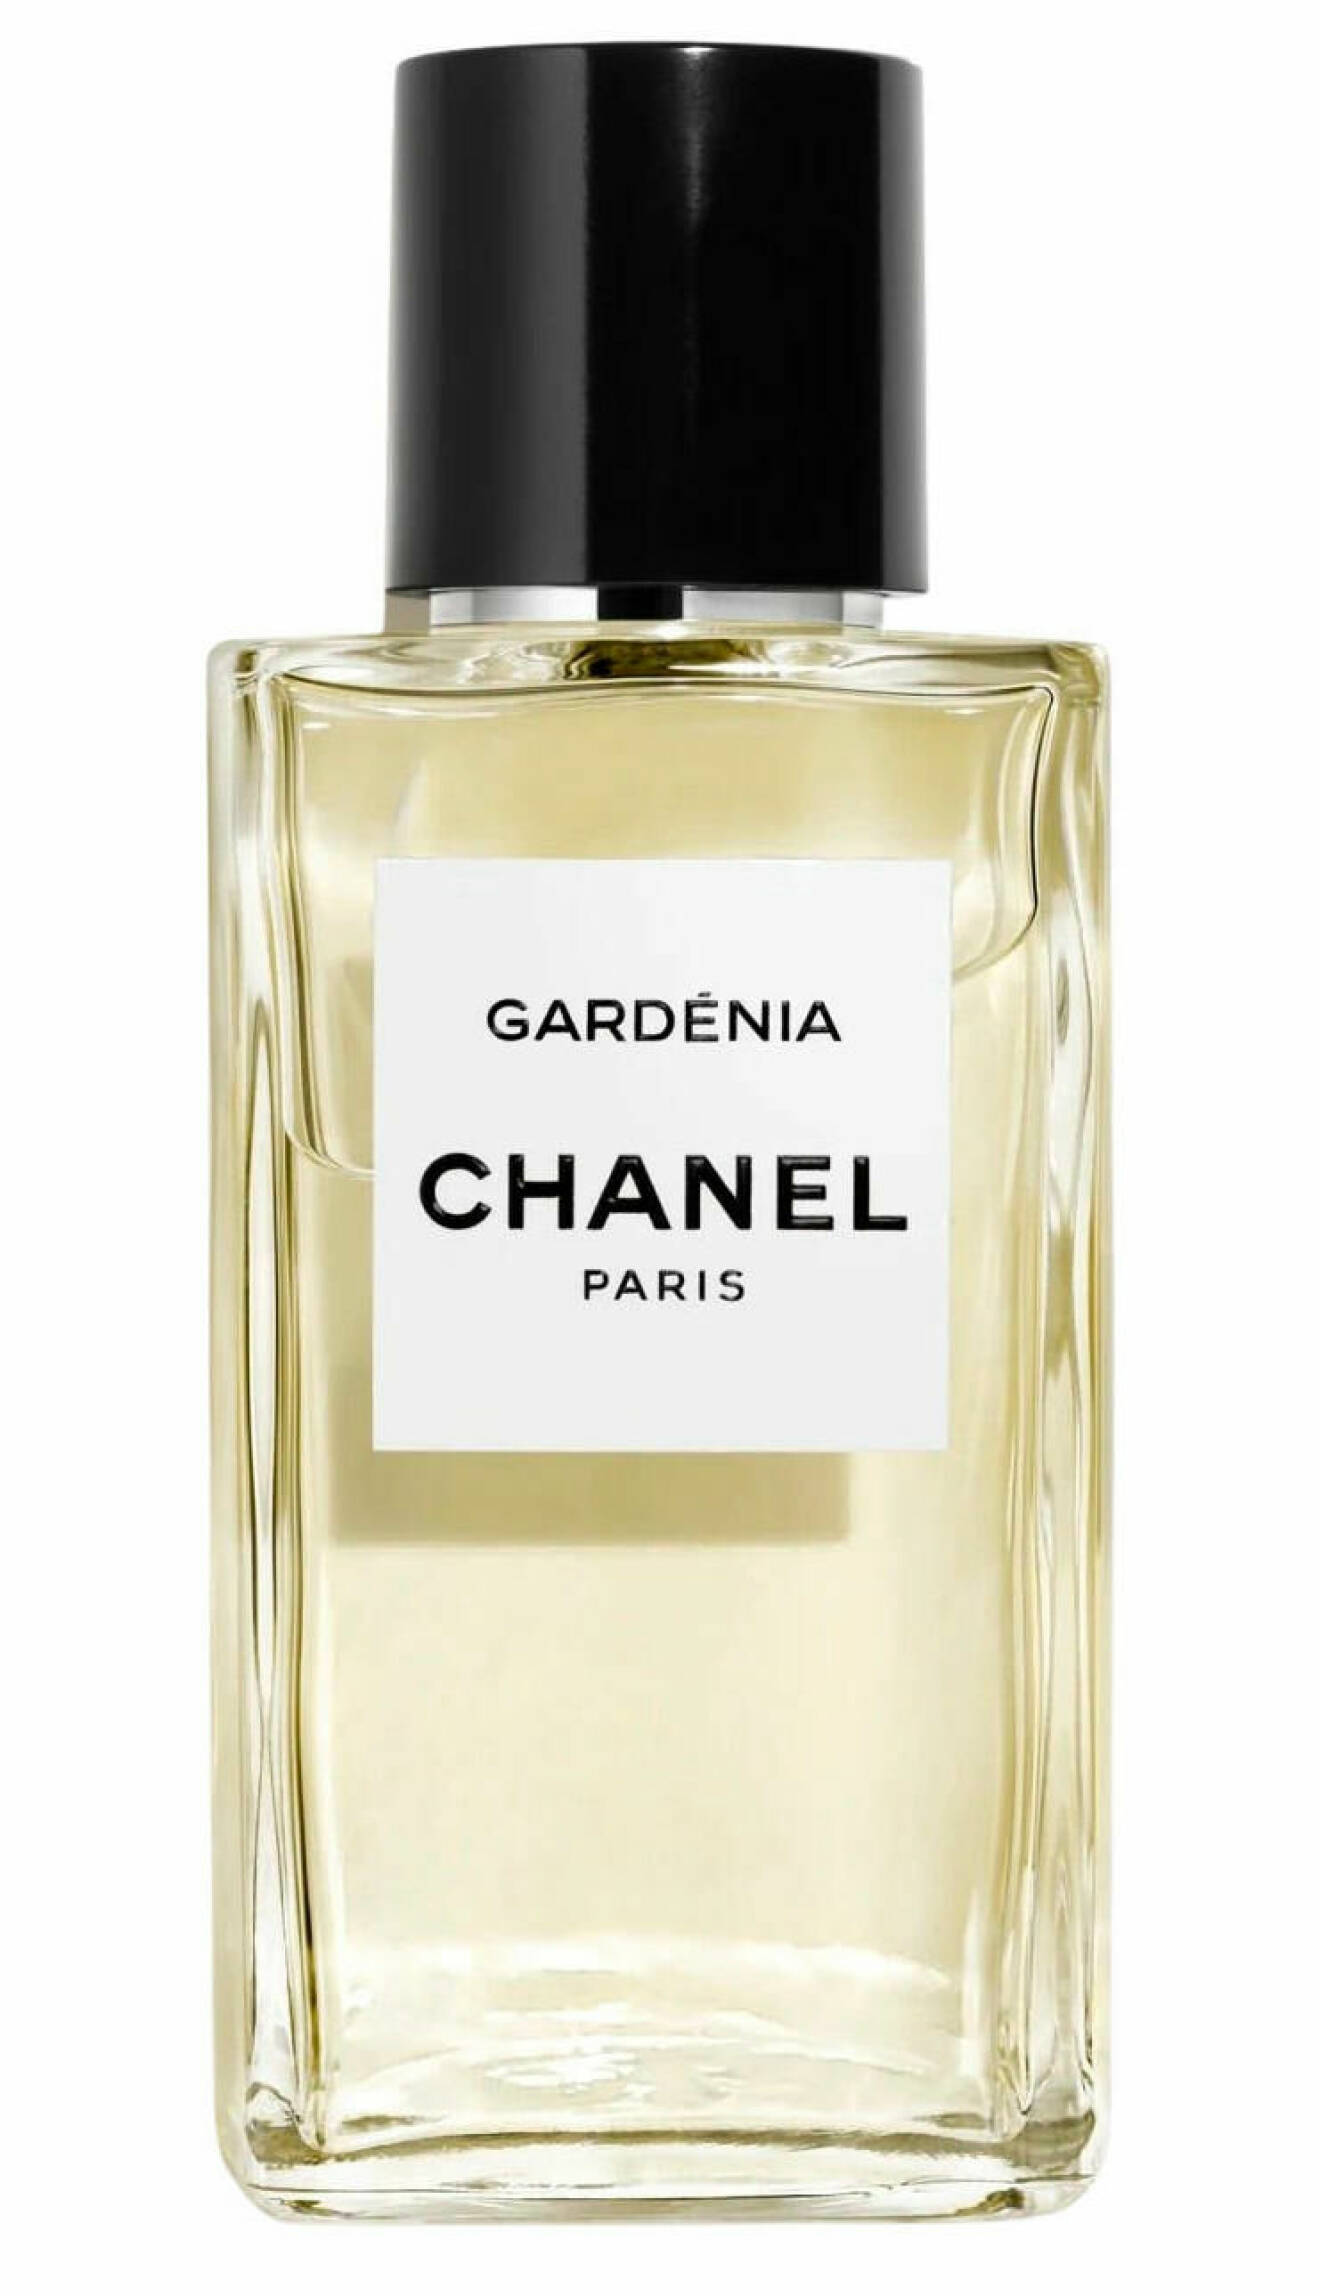 Parfymen Gardénia från Chanel.